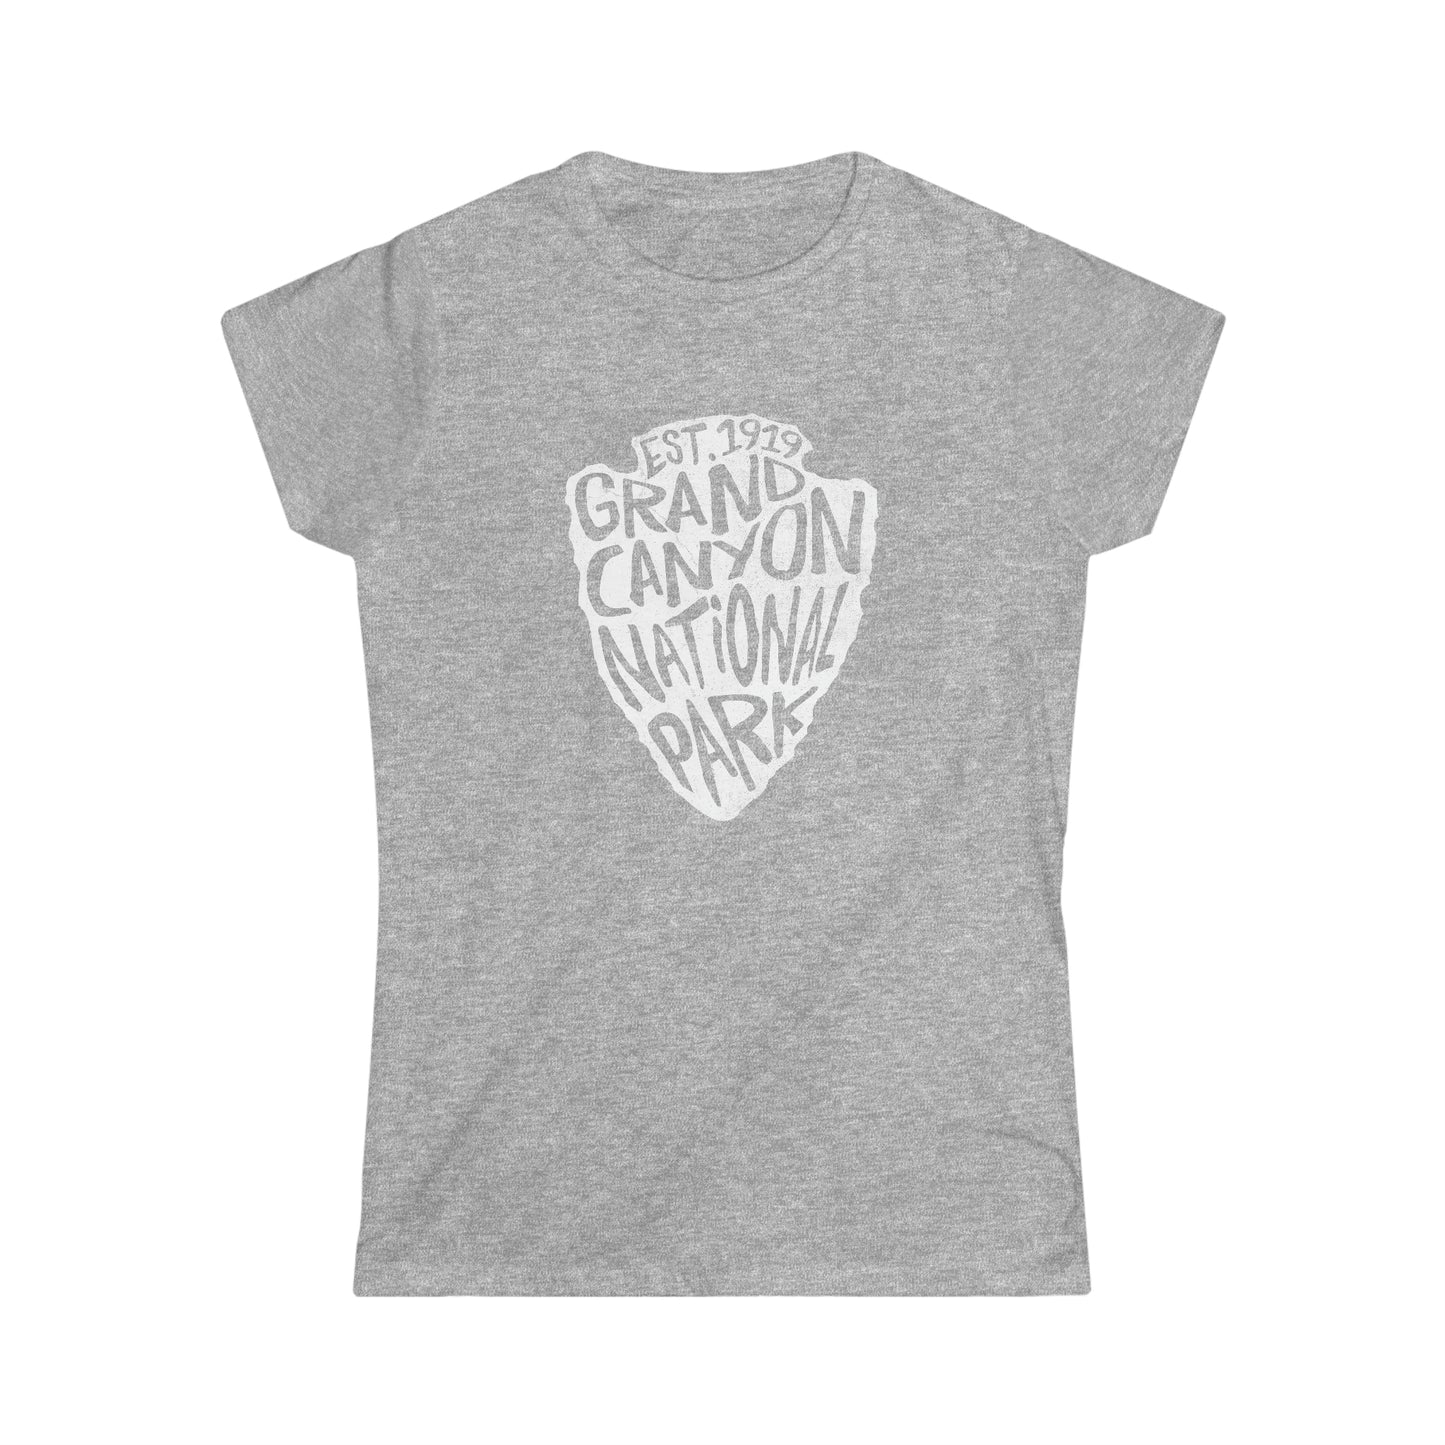 Grand Canyon National Park Women's T-Shirt - Arrowhead Design